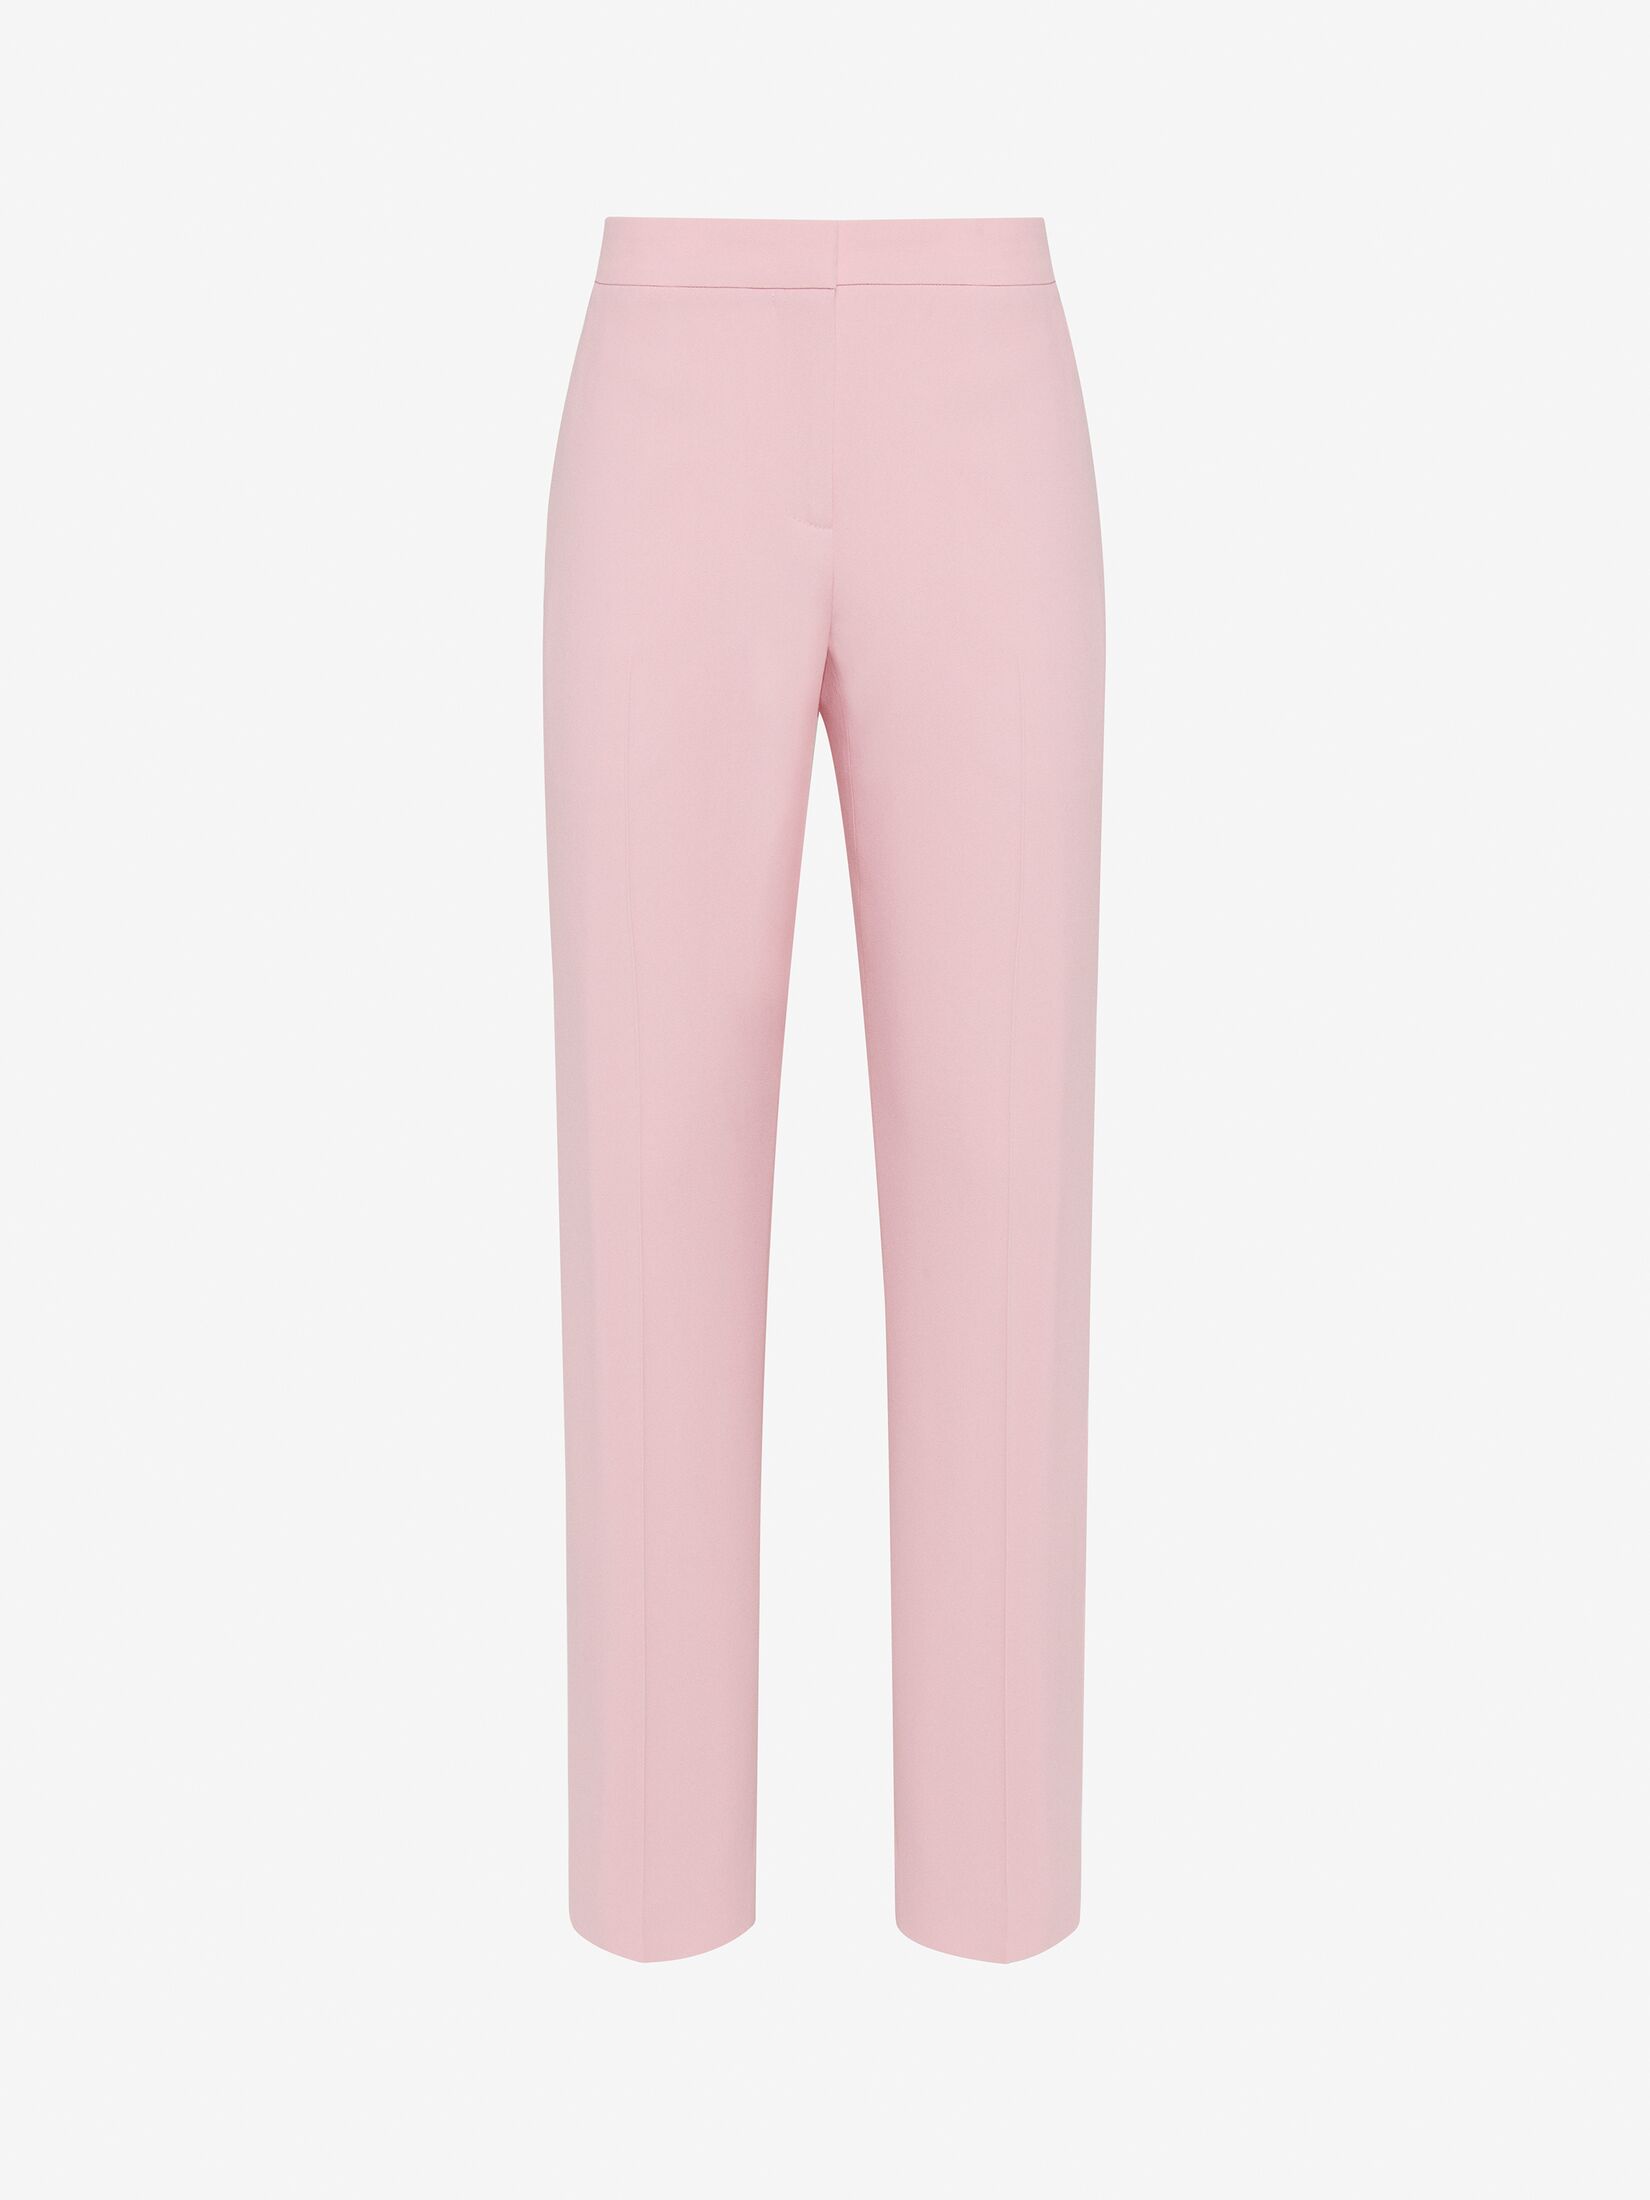 Pants for Women Cigarette Trousers High Waist Silk Pants Soft Breathable  Slim Skinny Pants (Hot Pink, XL) - Walmart.com